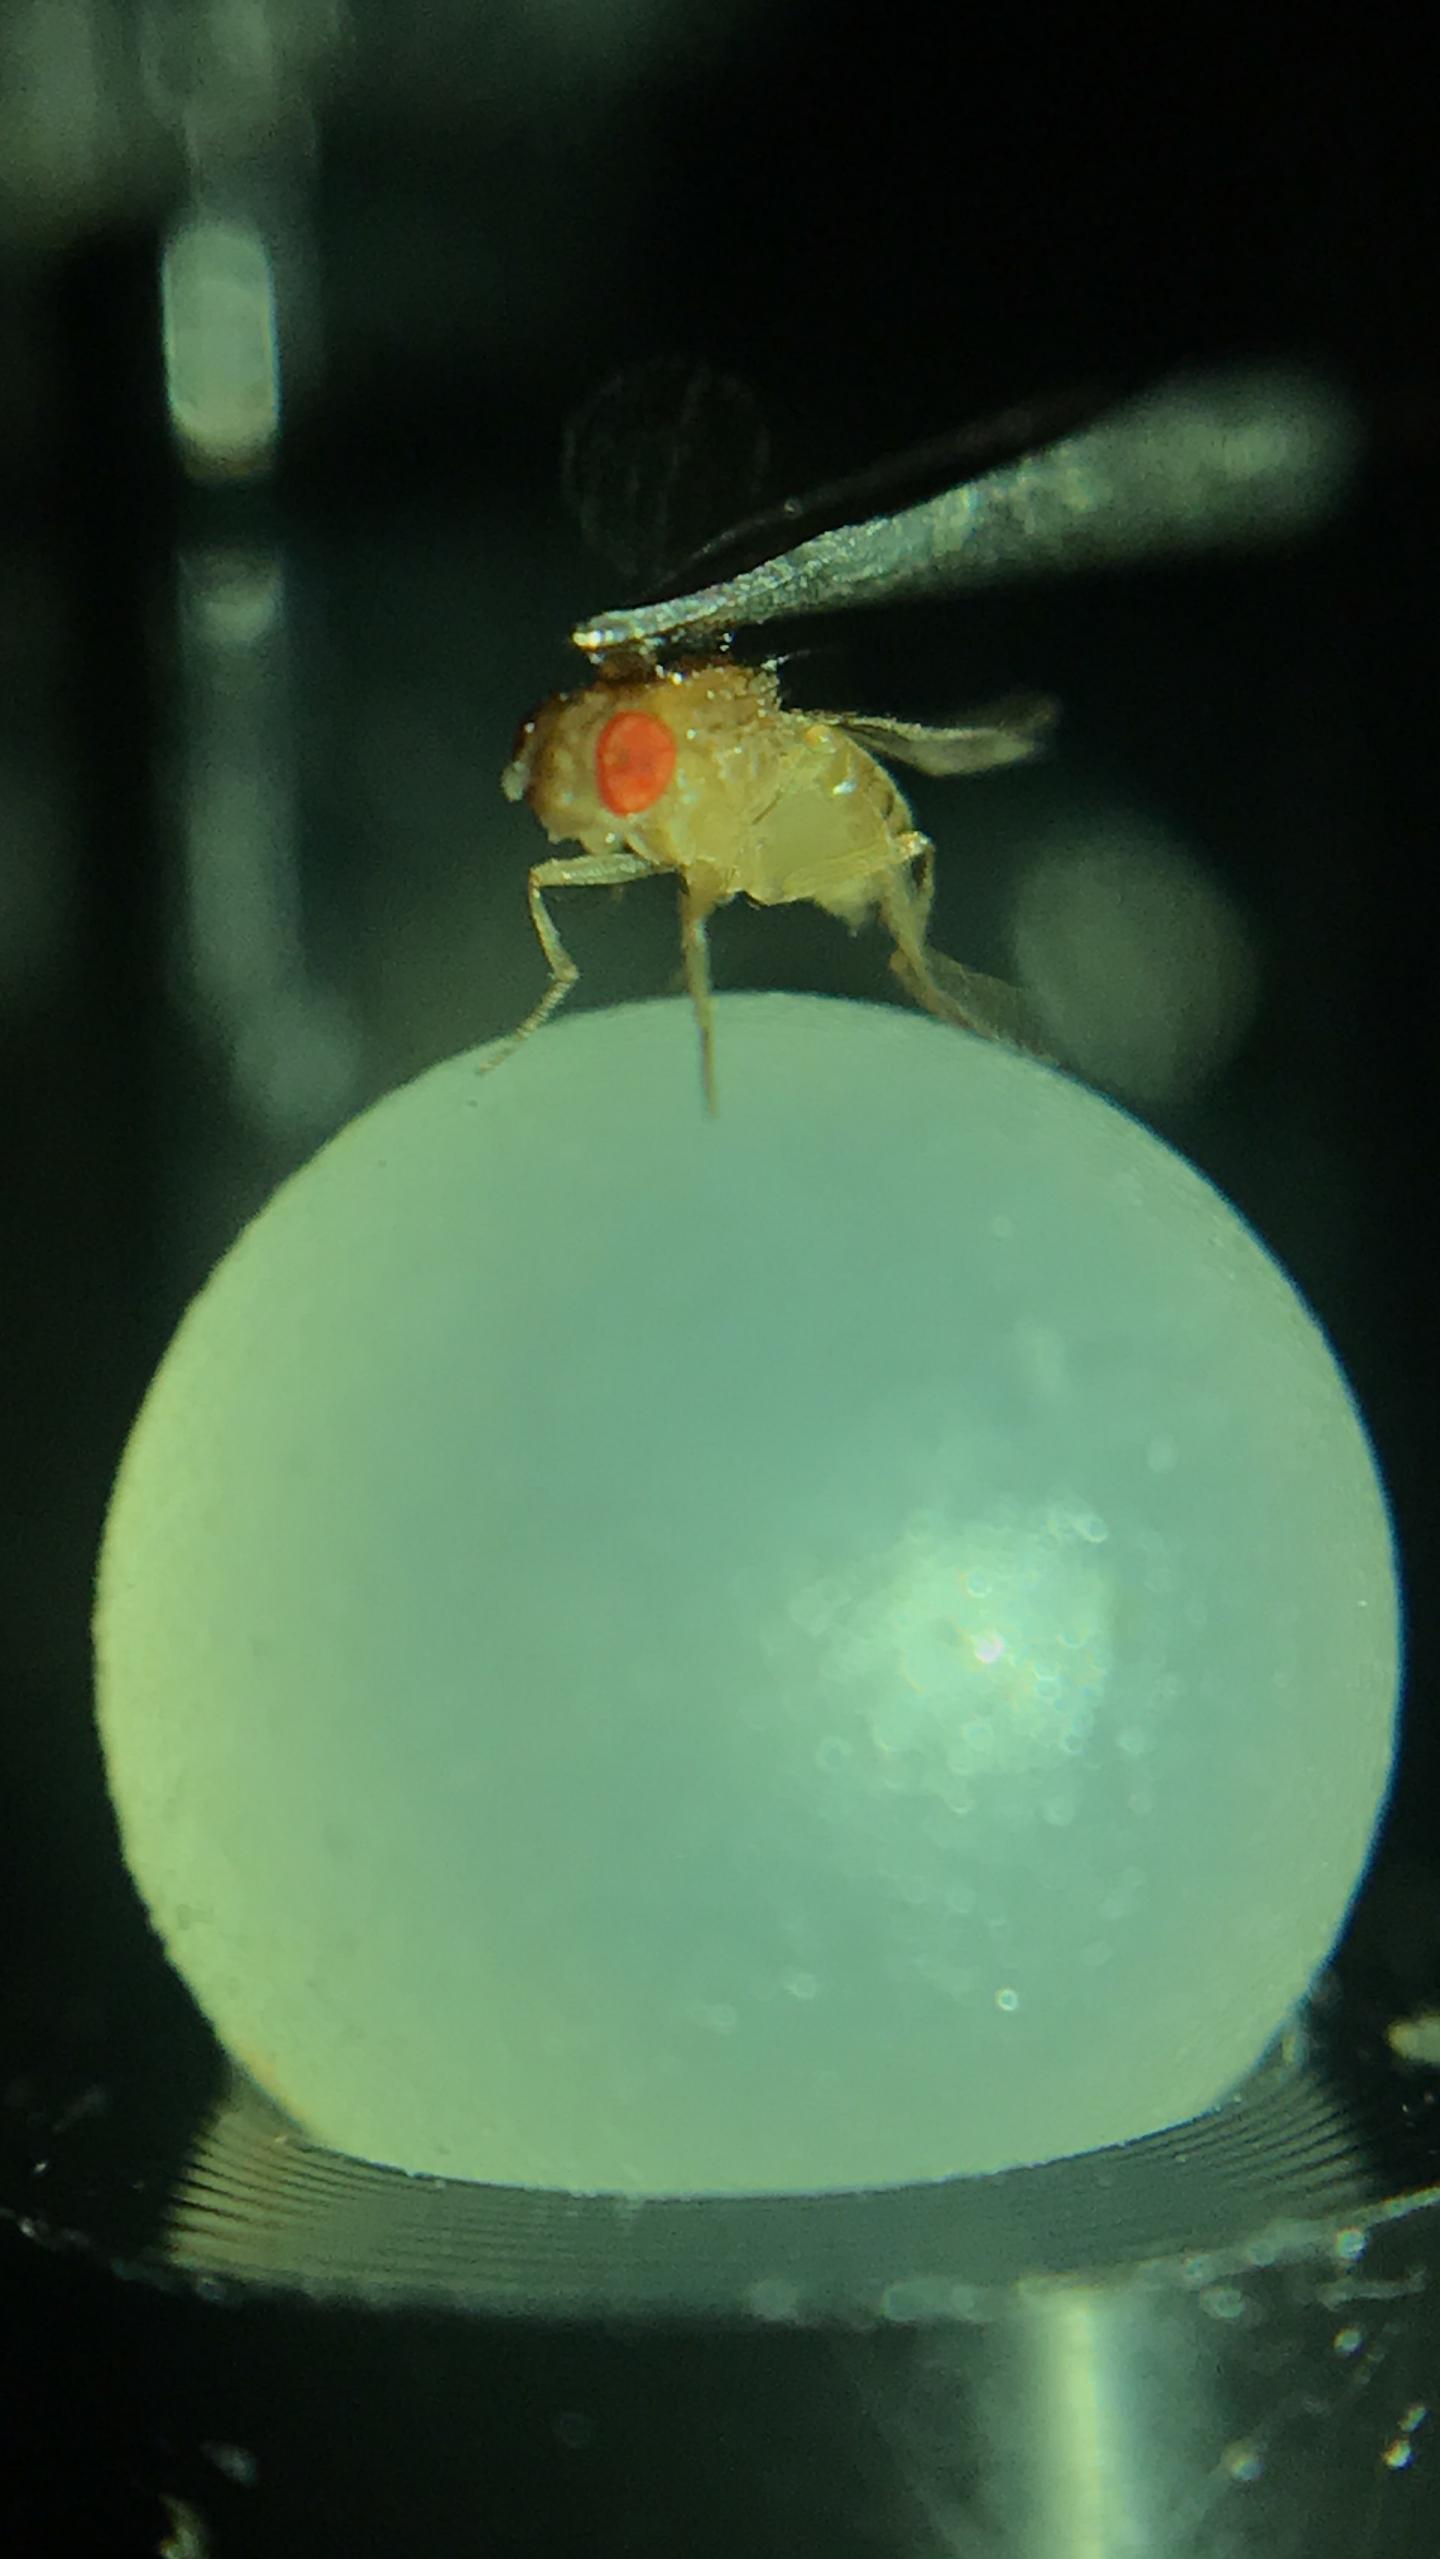 Fruit Fly on a Ball